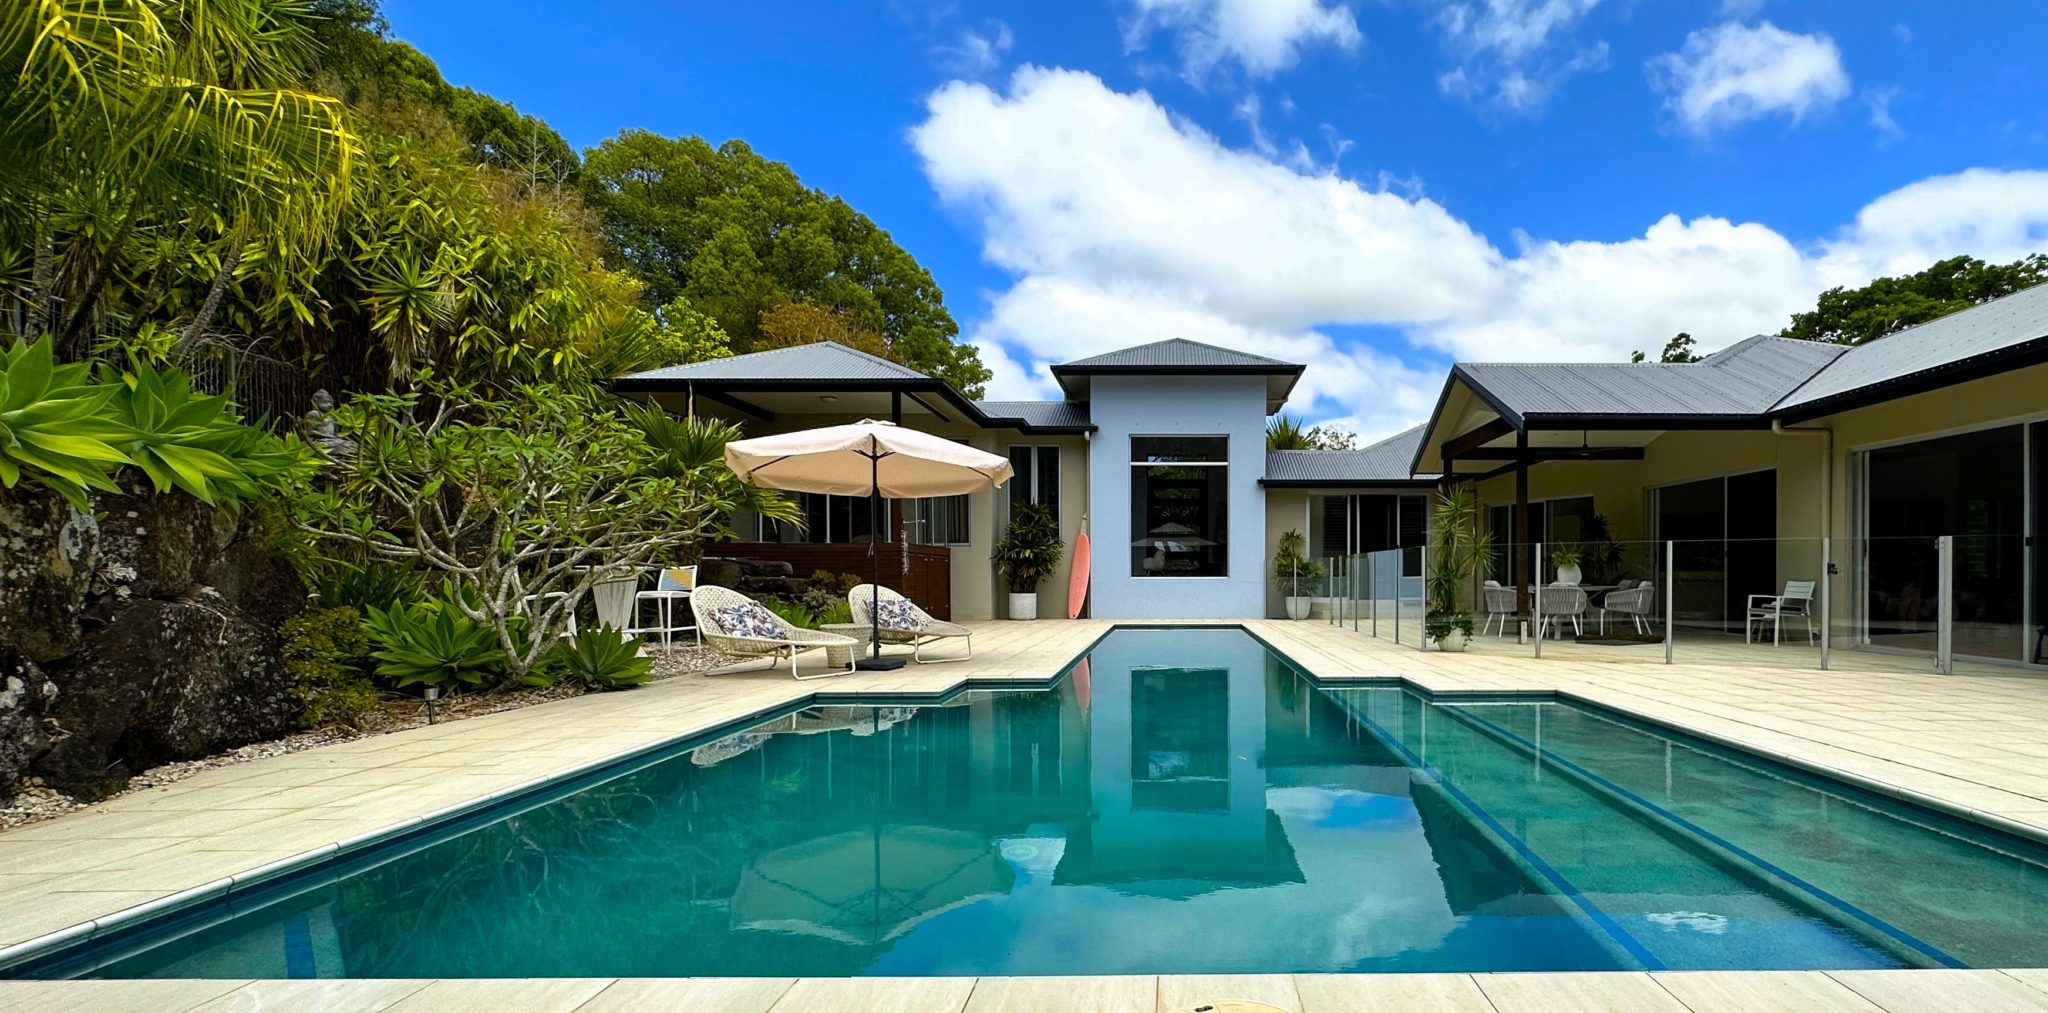 Bahamas Style tropical hinterland house